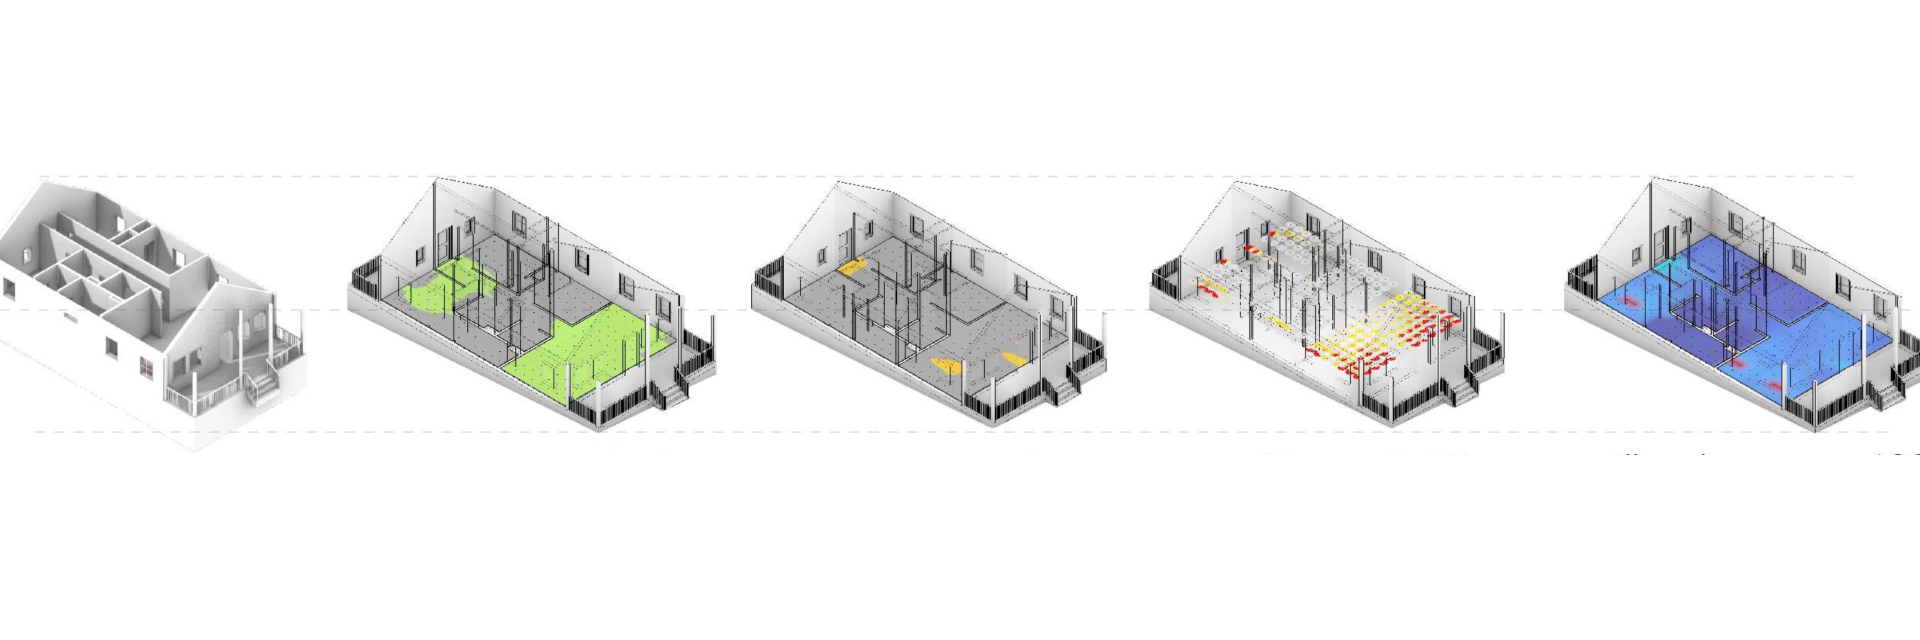 Design plan for house constuction by GT Solar Decathlon team.